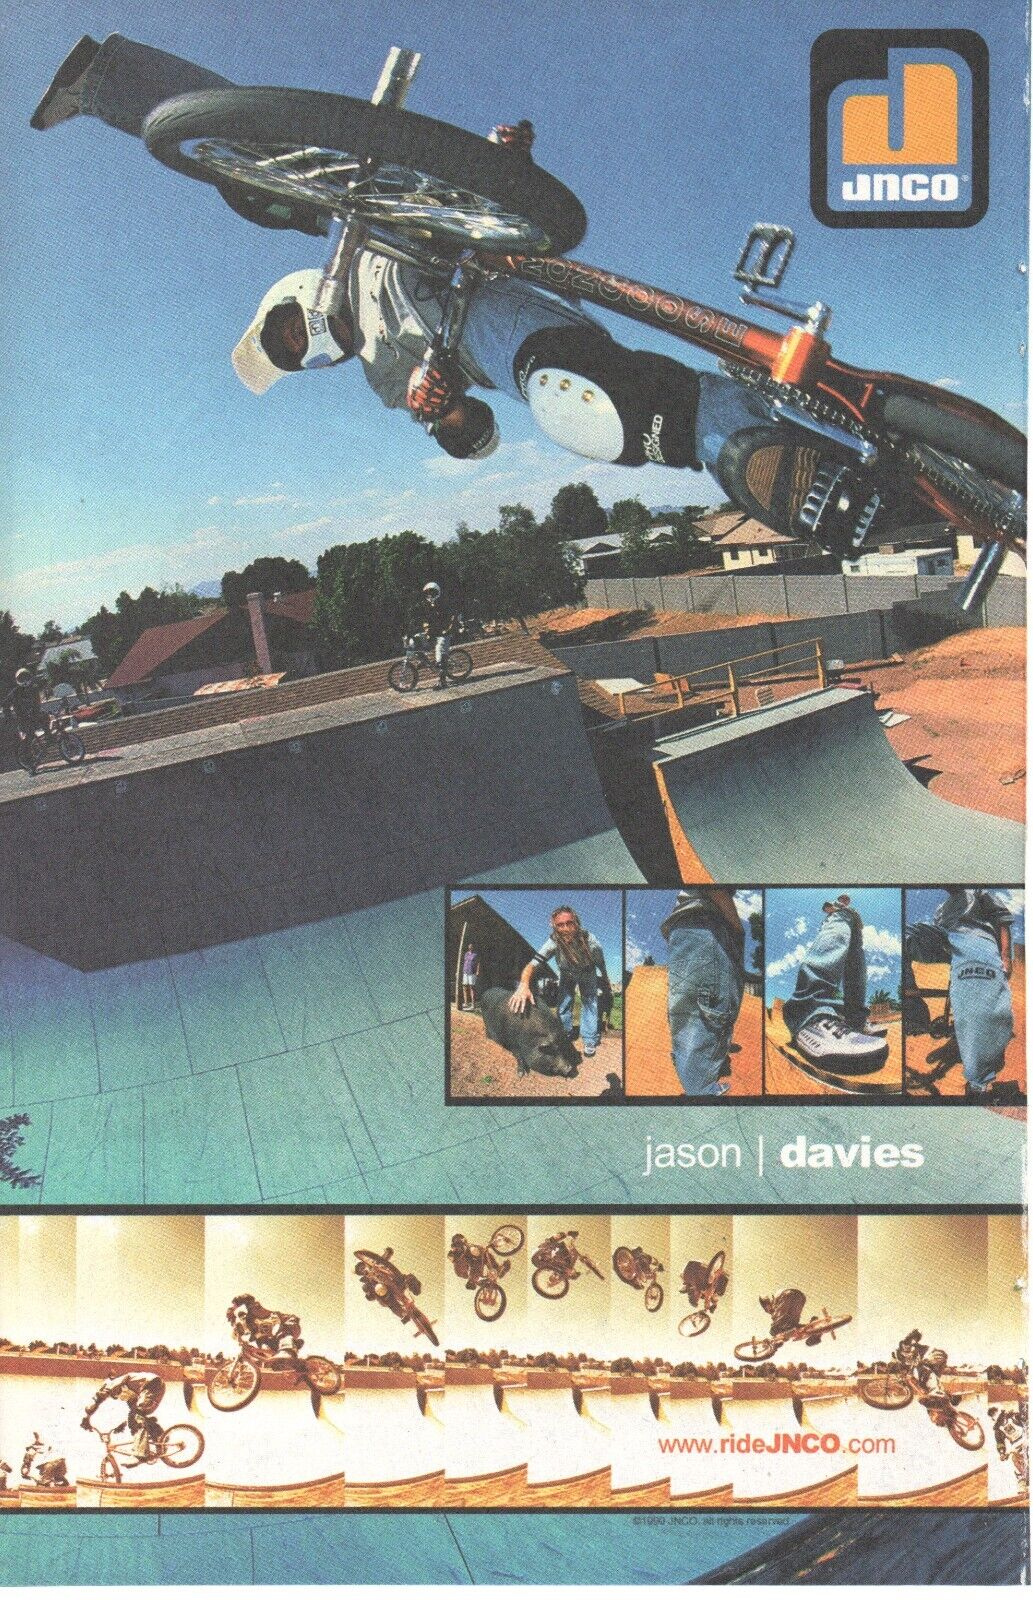 1999 Jnco Jeans Print Ad/Poster Jason Davies BMX Bike Skateboard Apparel 90s